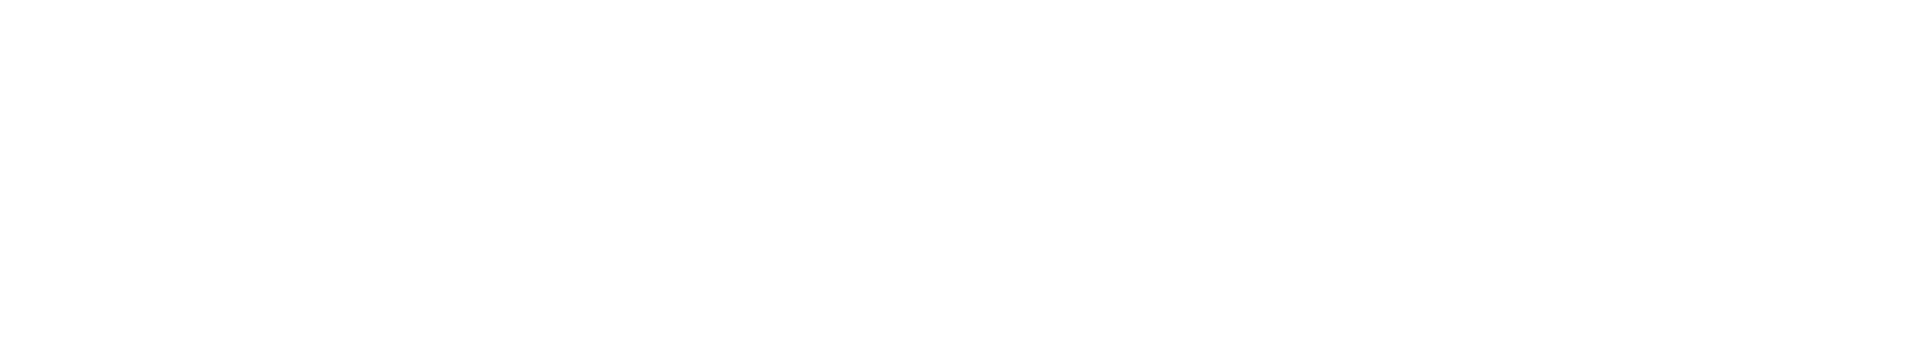 Размер рулона, «-Брик», форма «Слим», 1000 мл с крышкой, таблица